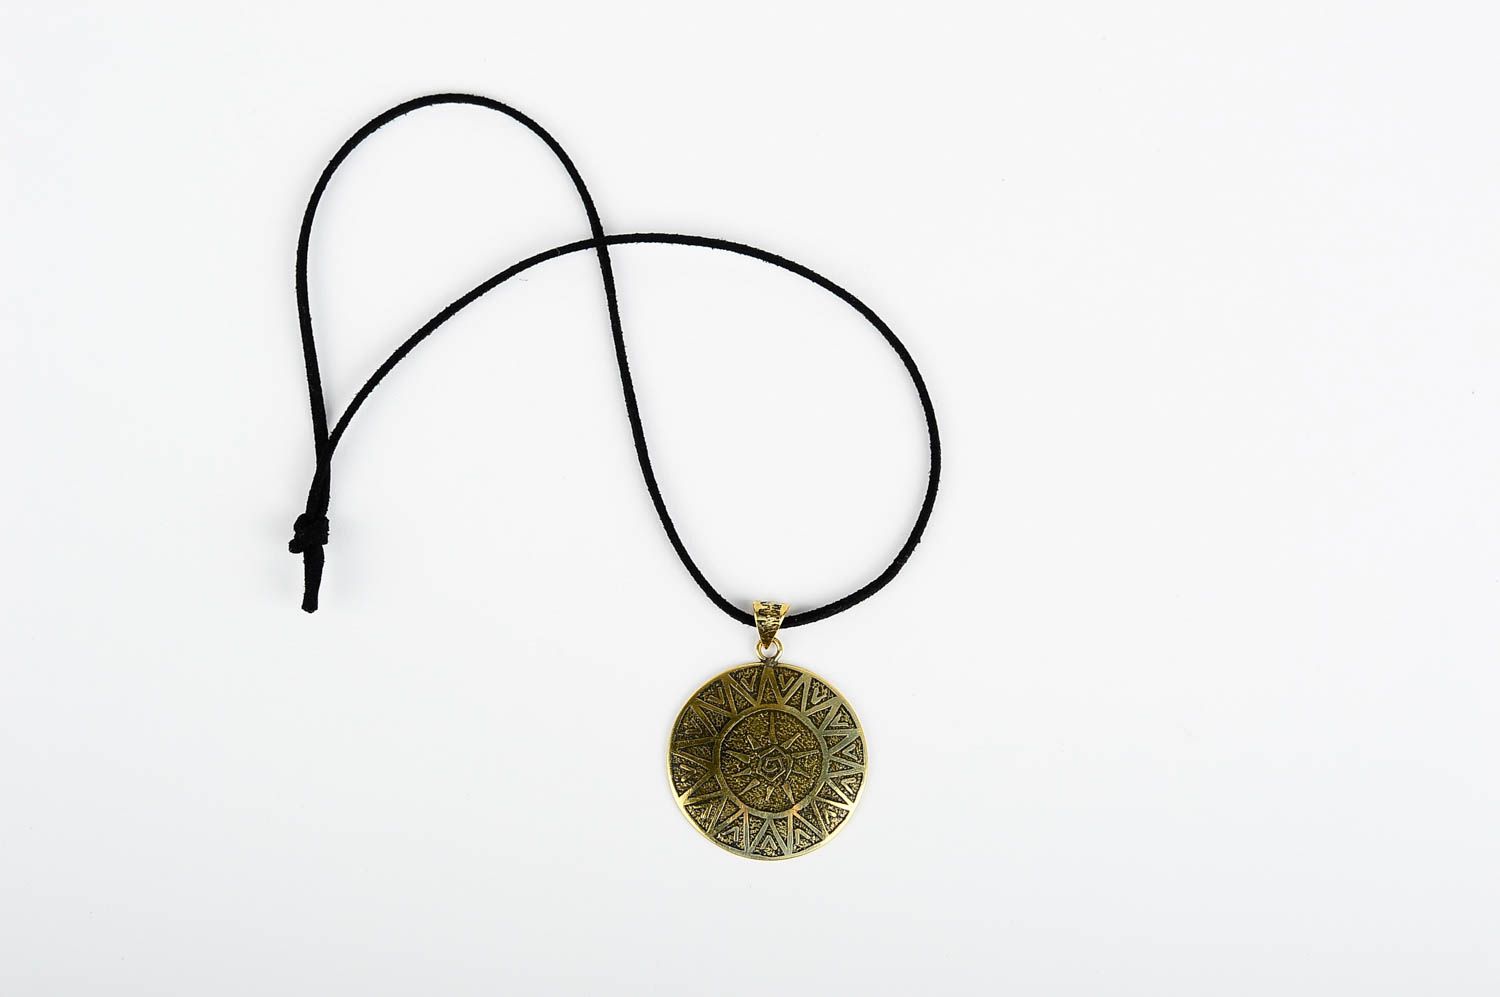 Handmade pendant unusual accessory gift ideas metal pendant for women photo 1